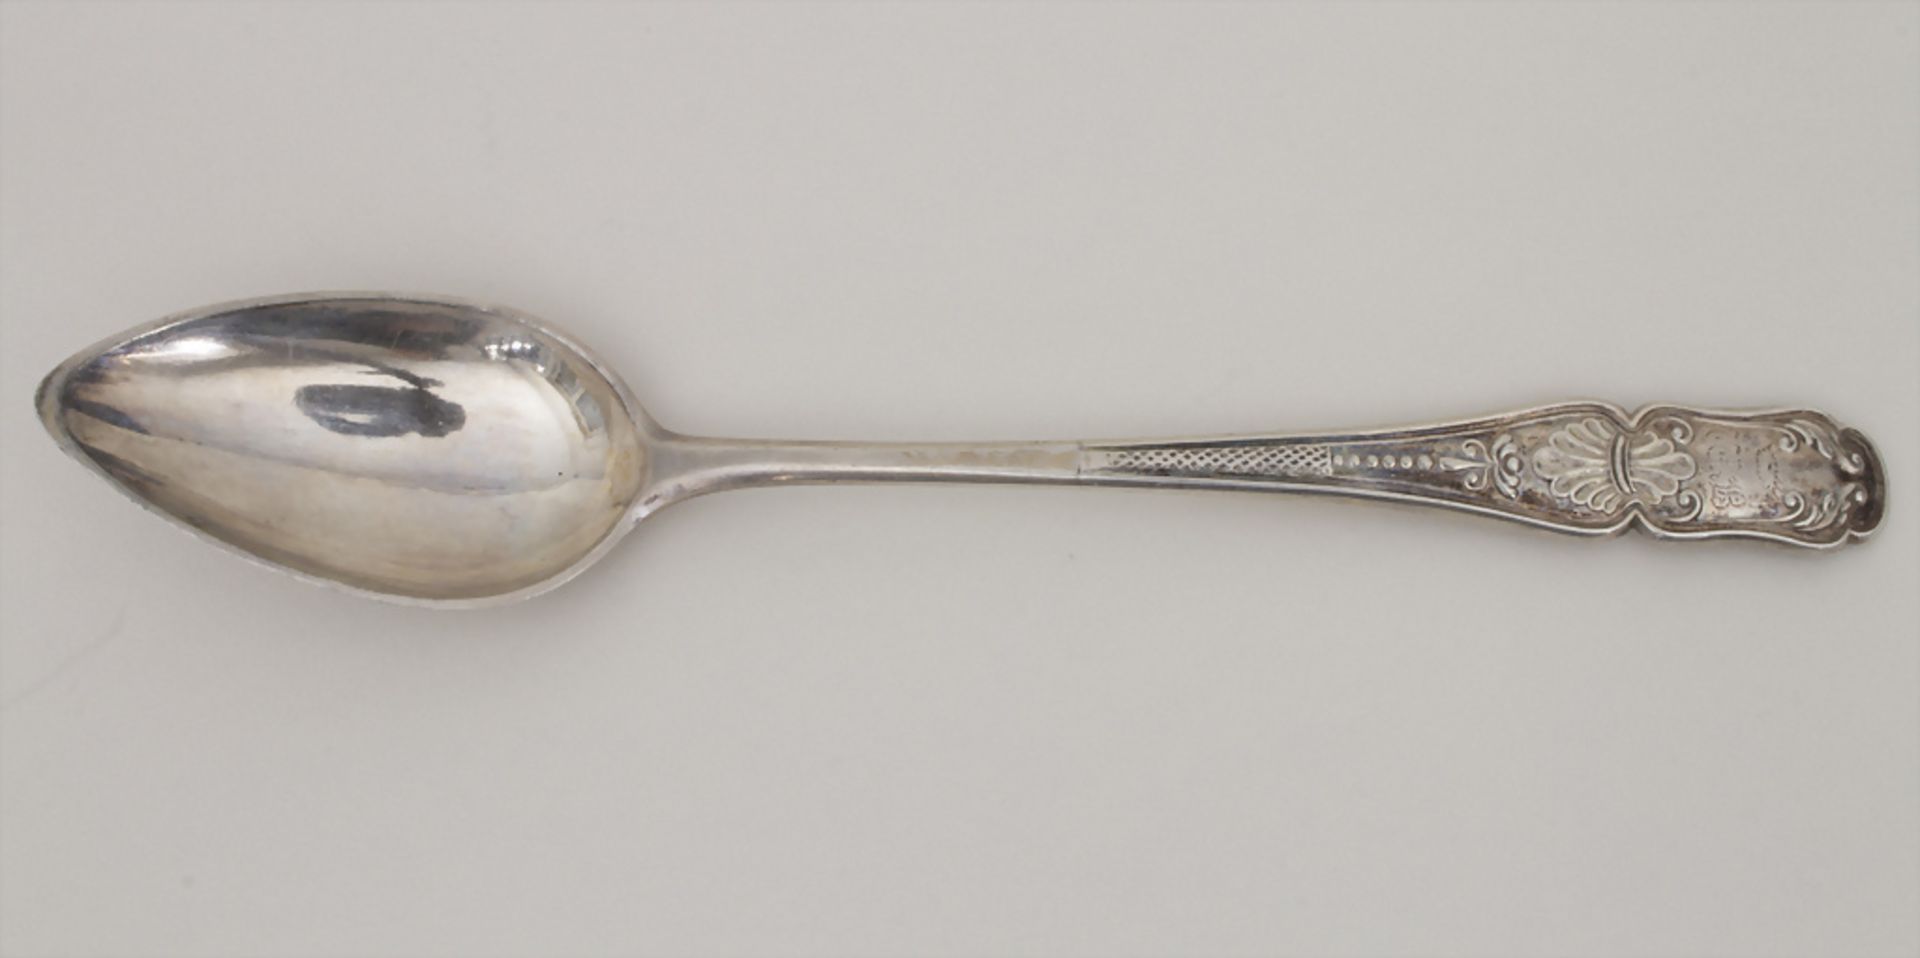 6 Teelöffel / 6 silver tea spoons, um 1800 - Bild 3 aus 6